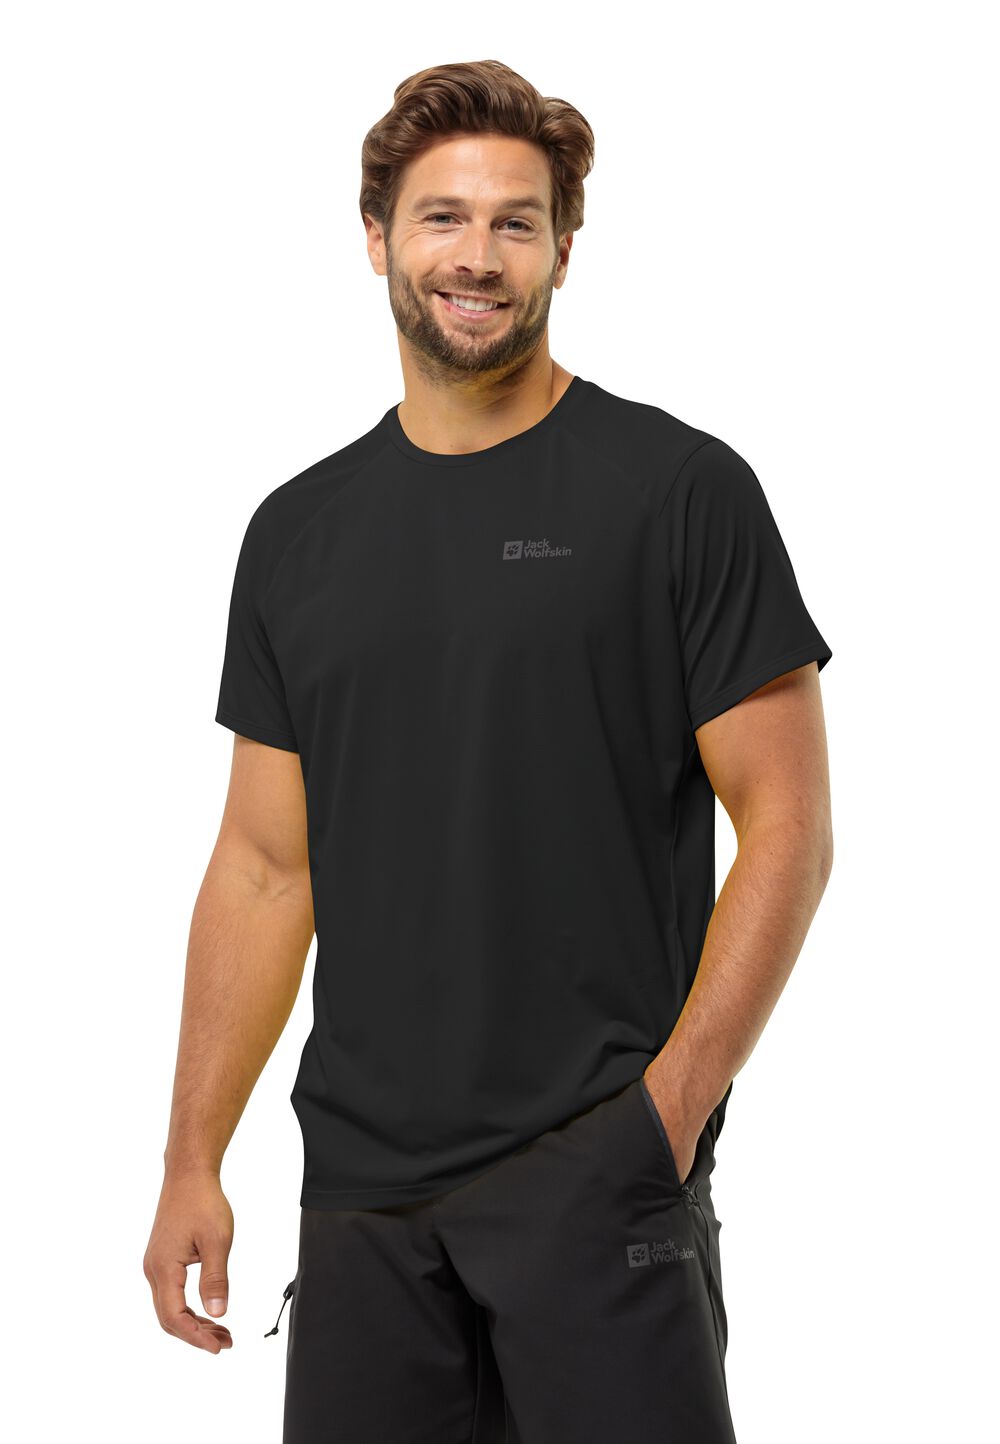 Jack Wolfskin Prelight Trail T-Shirt Men Functioneel shirt Heren M zwart black